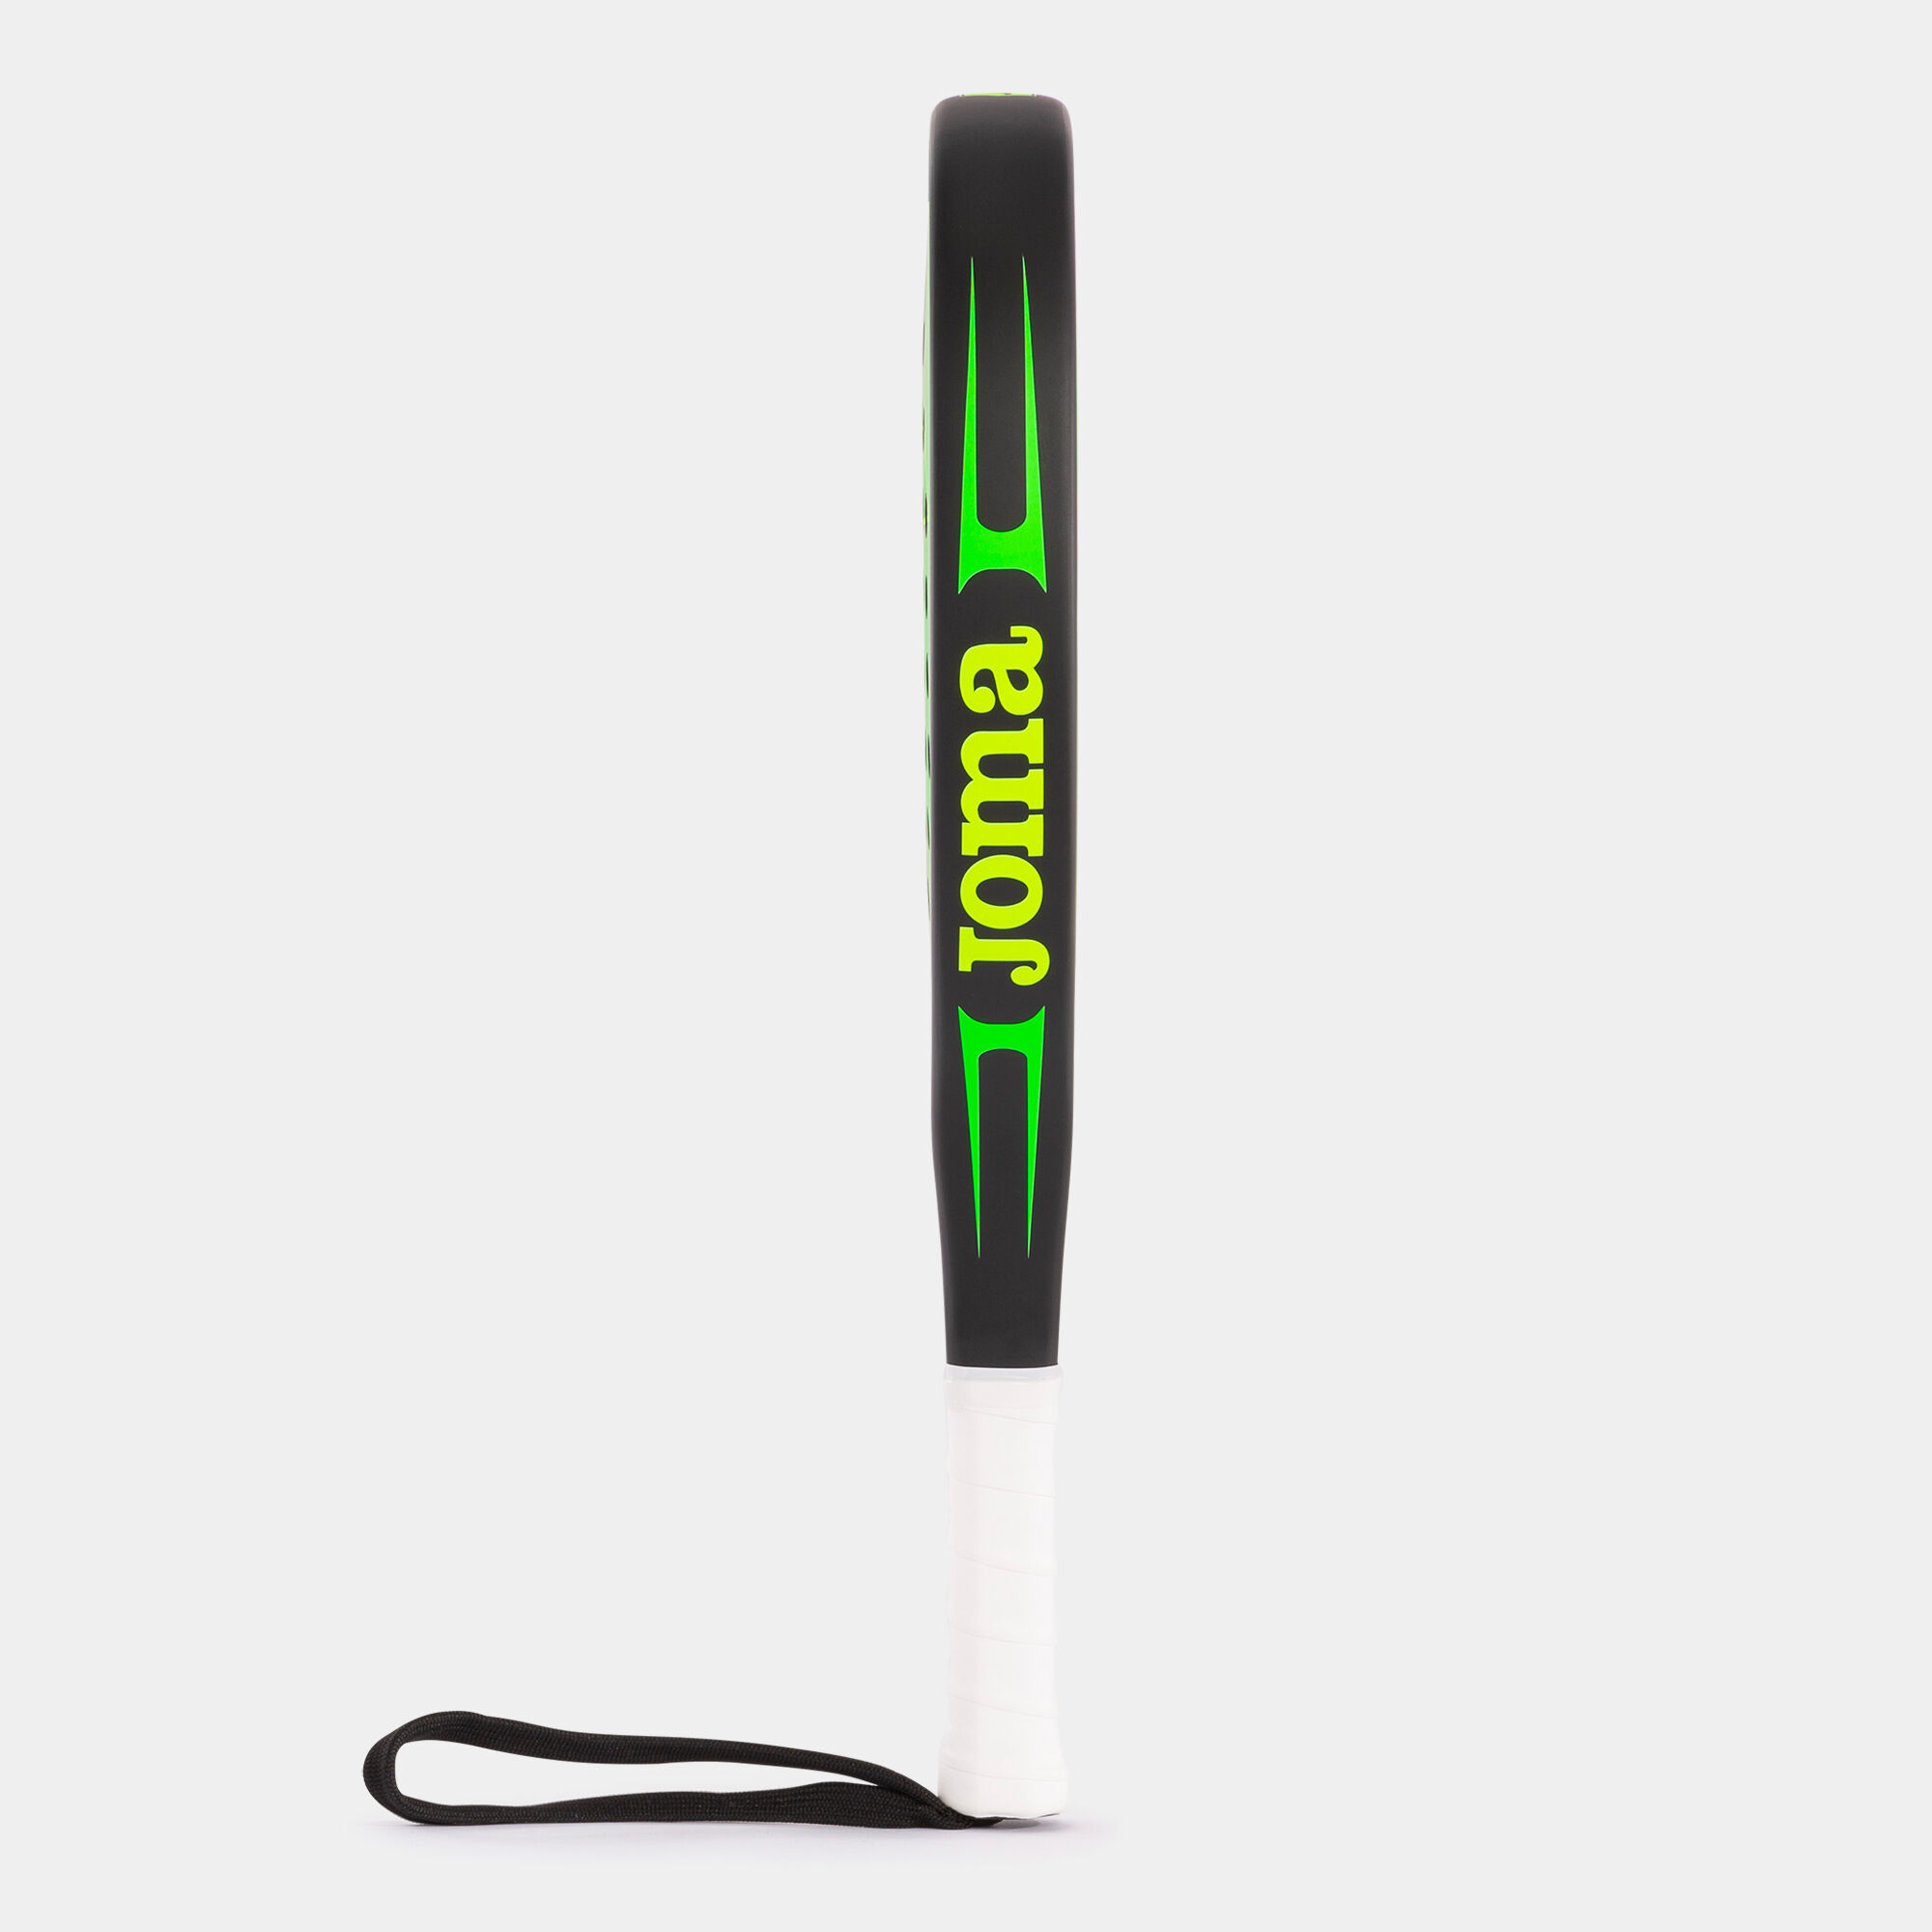 Padel racket Master black fluorescent green